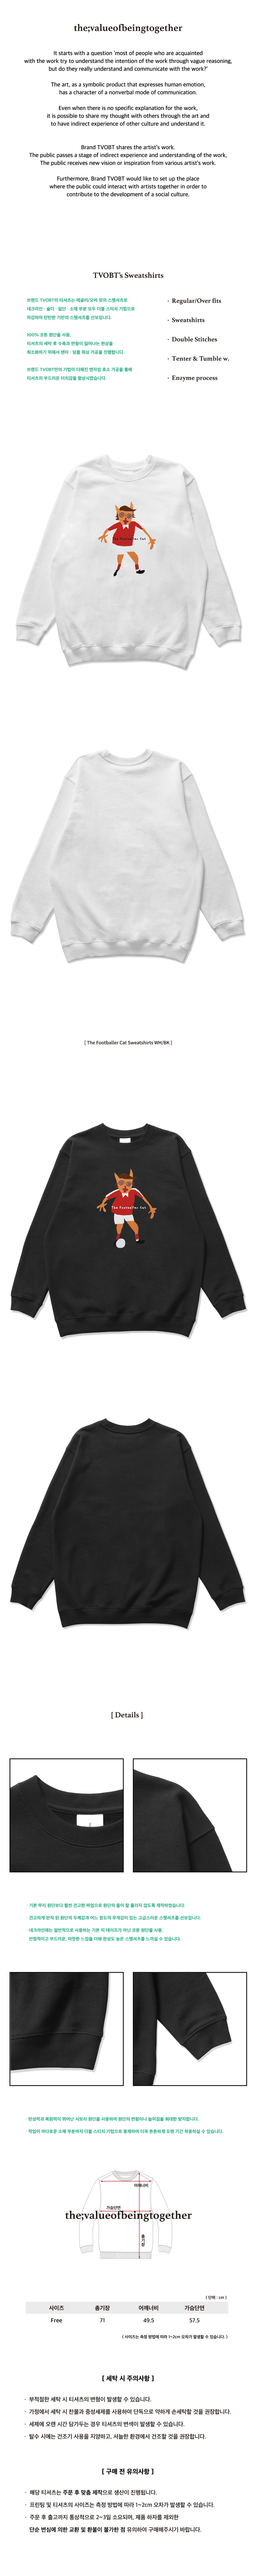 The Footballer Cat Sweatshirts WH/BK